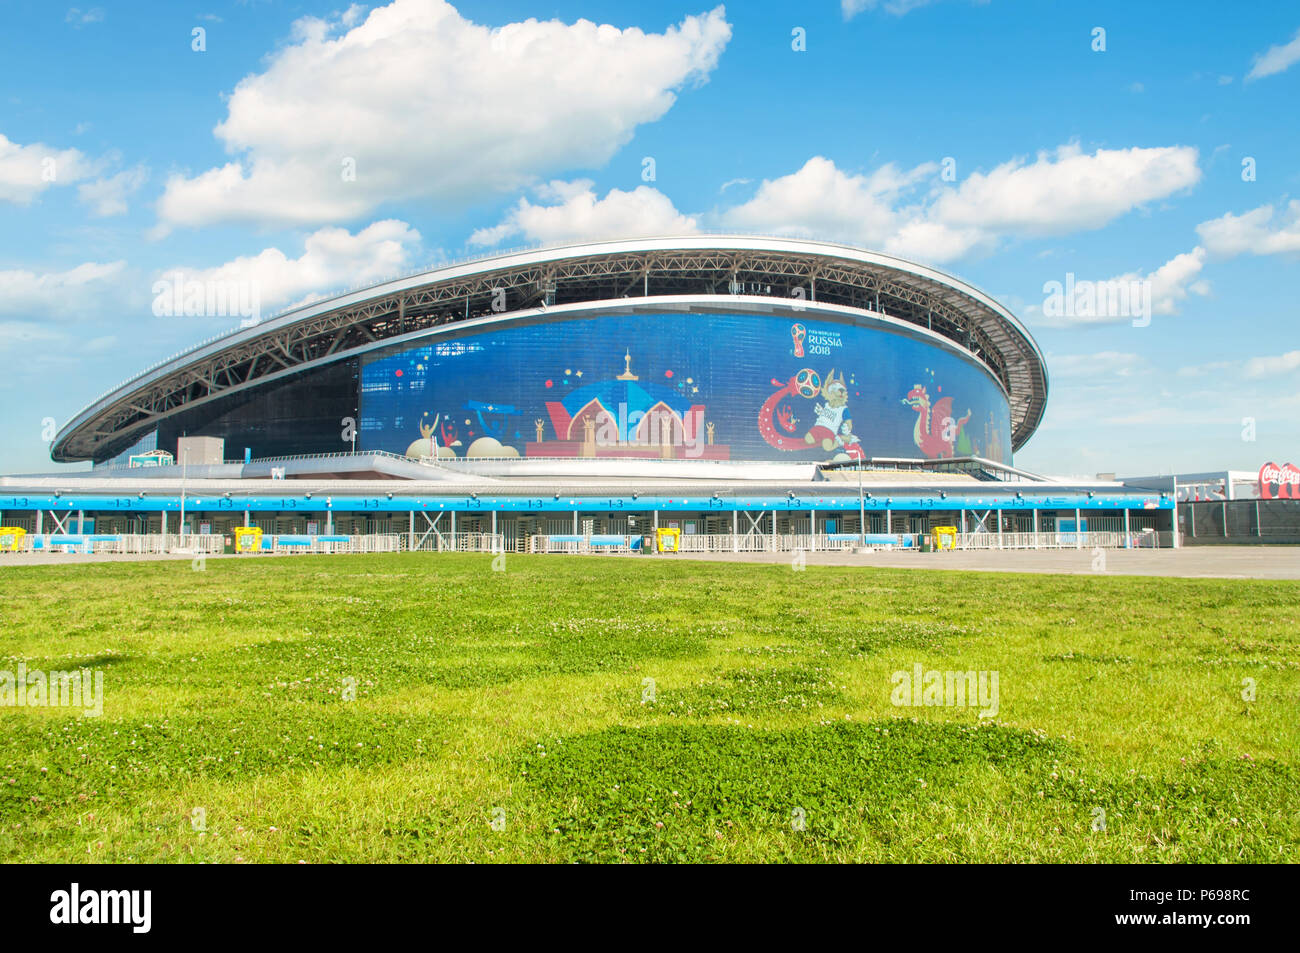 KAZAN, Rusia - 25 de junio, 2018: Kazan estadio Arena con hierba verde en primer plano y la FIFA 2018 Zabivaka símbolo en la pantalla grande. Foto de stock